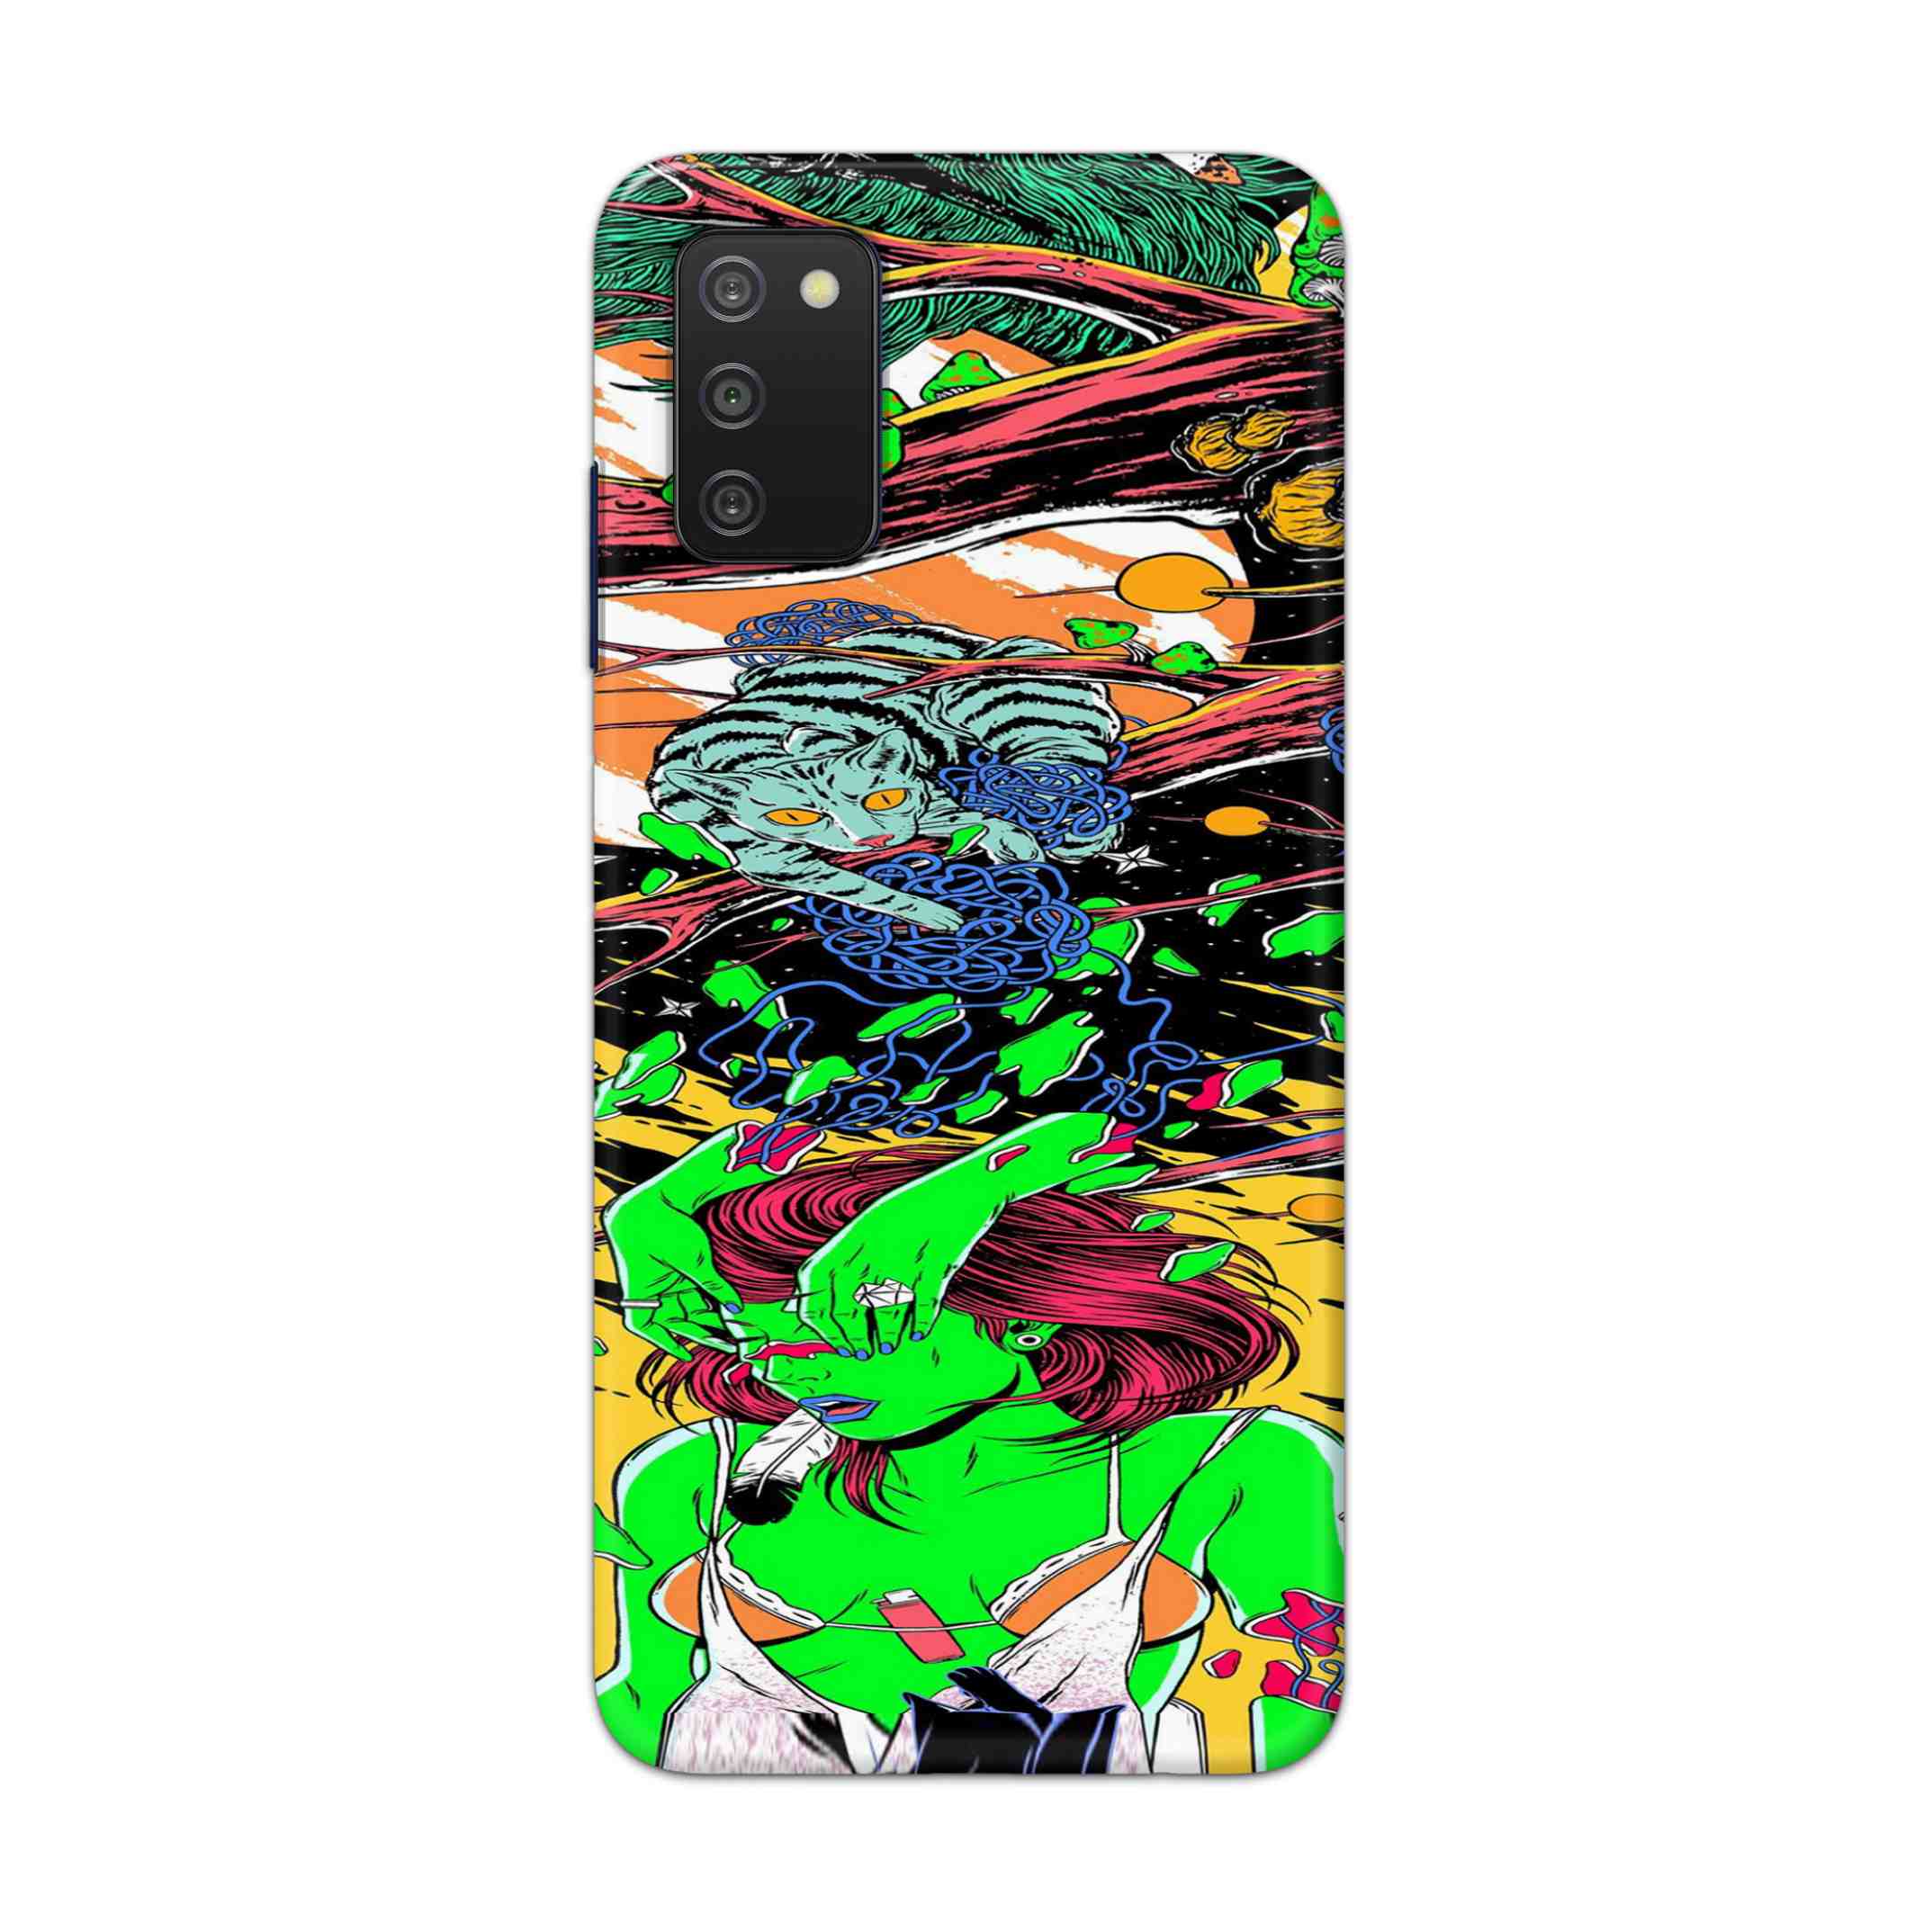 Buy Green Girl Art Hard Back Mobile Phone Case Cover For Samsung A03s Online